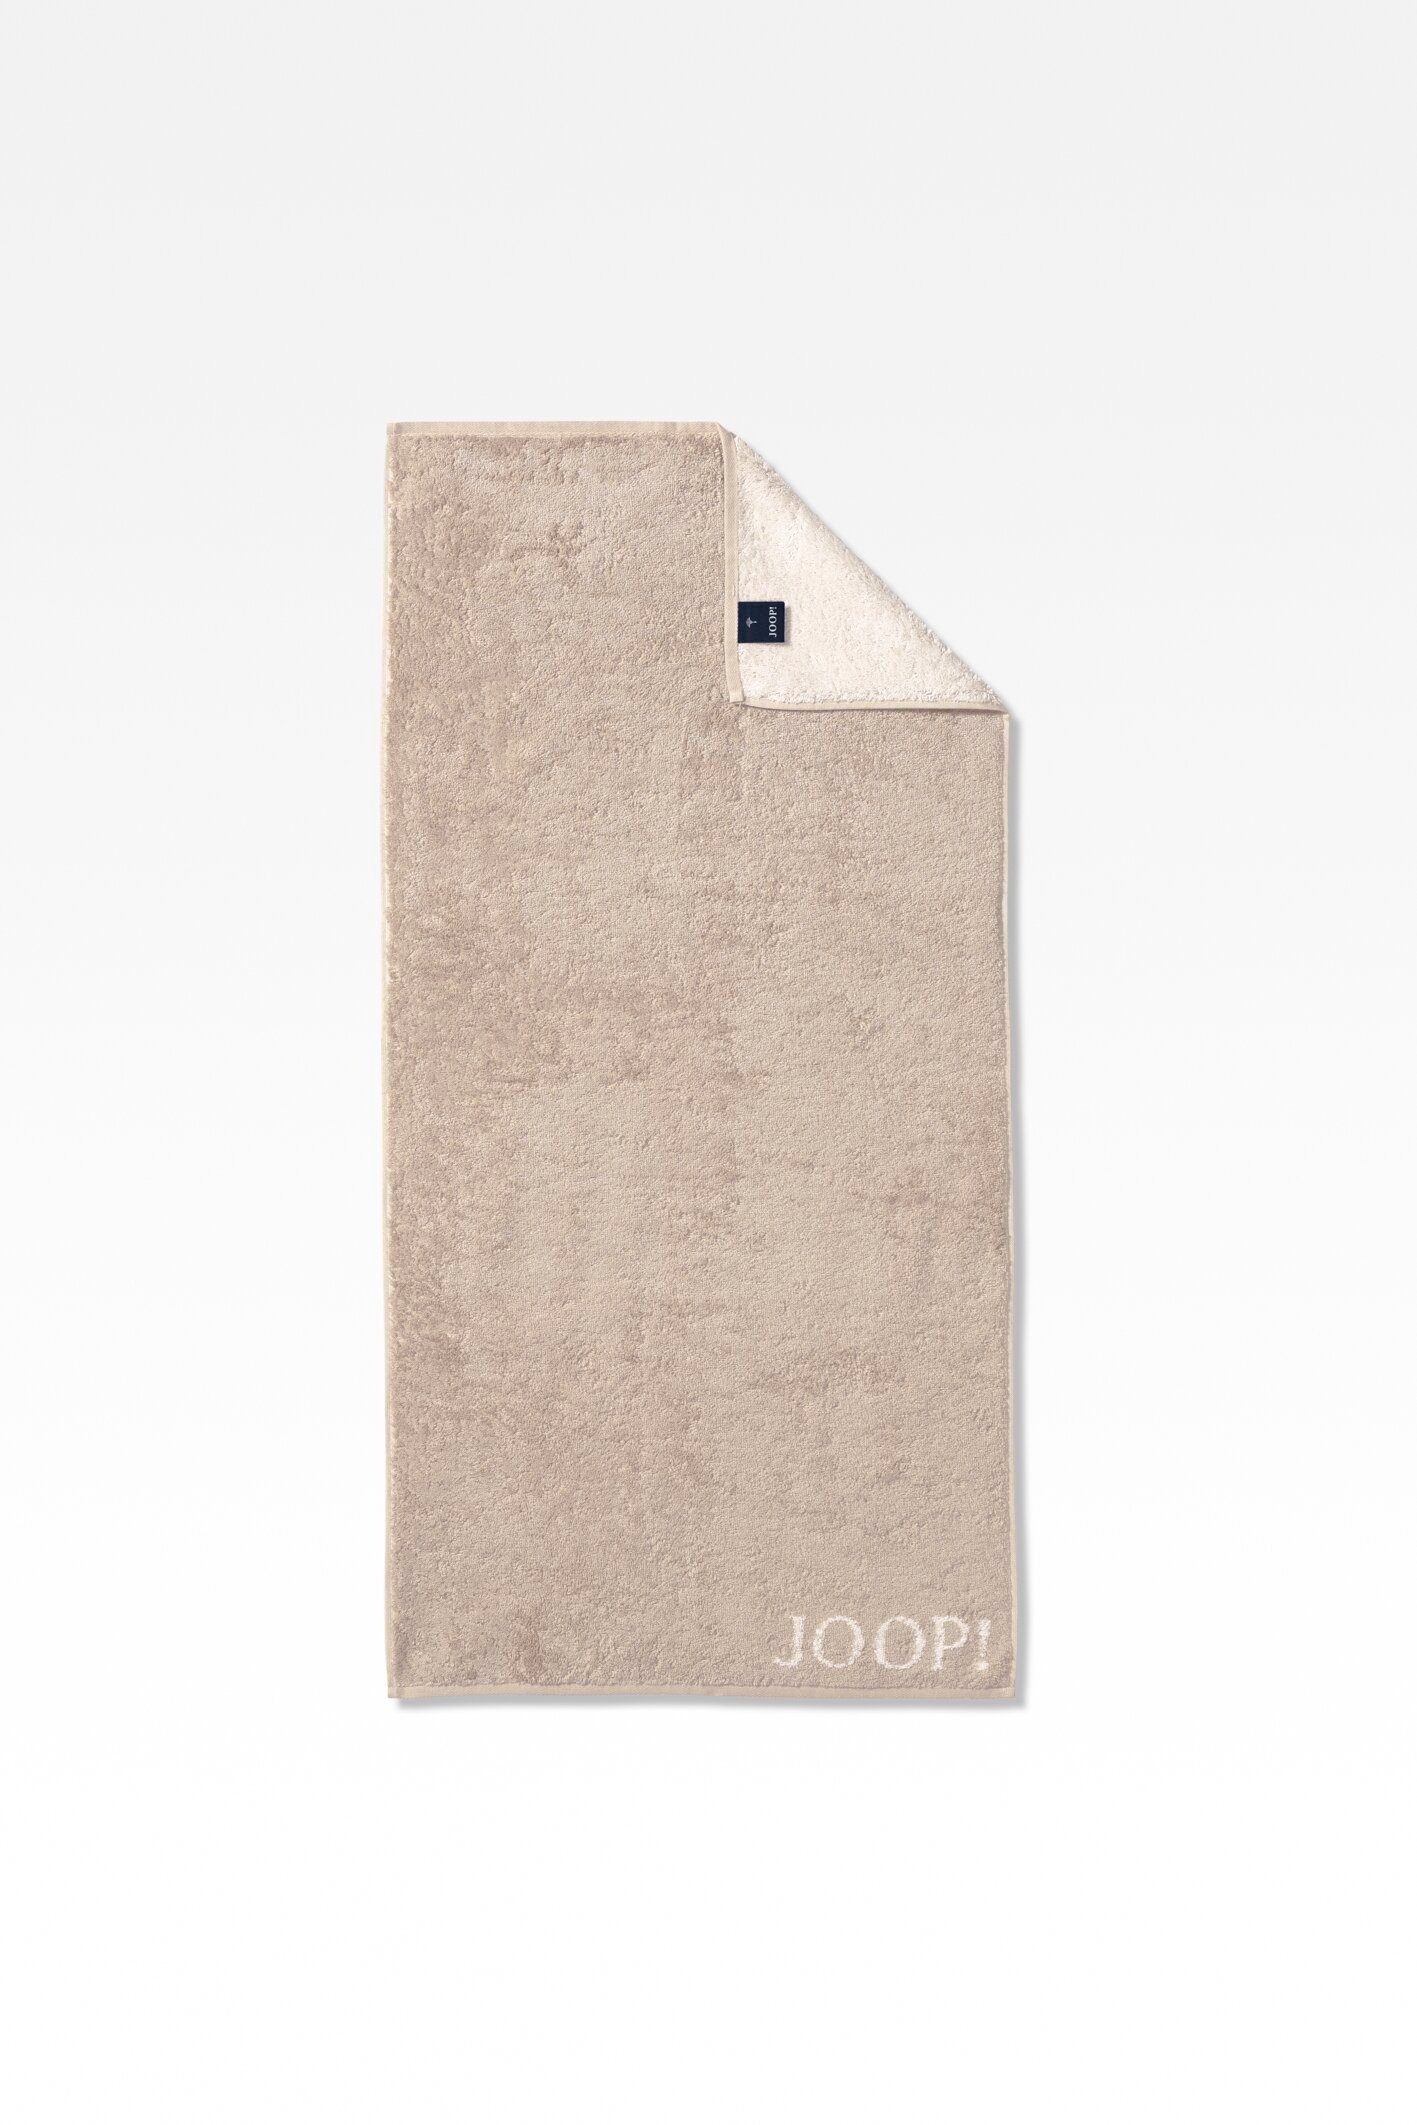 Textil Handtuch-Set, Joop! (2-St) DOUBLEFACE JOOP! - LIVING Handtücher Sand CLASSIC